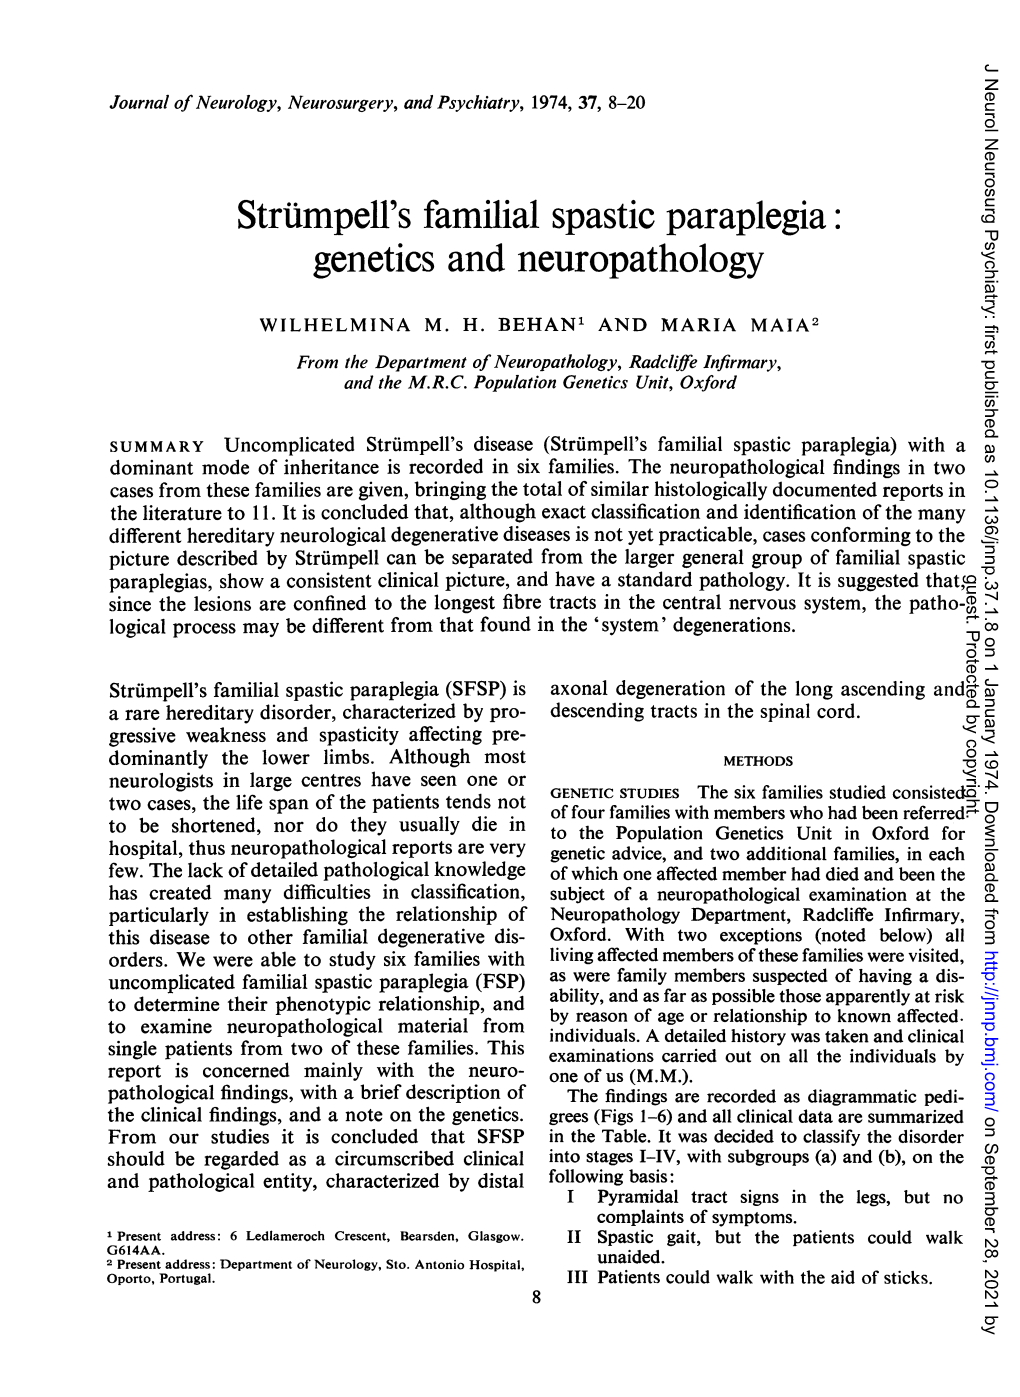 Strumpell's Familial Spastic Paraplegia: Genetics and Neuropathology